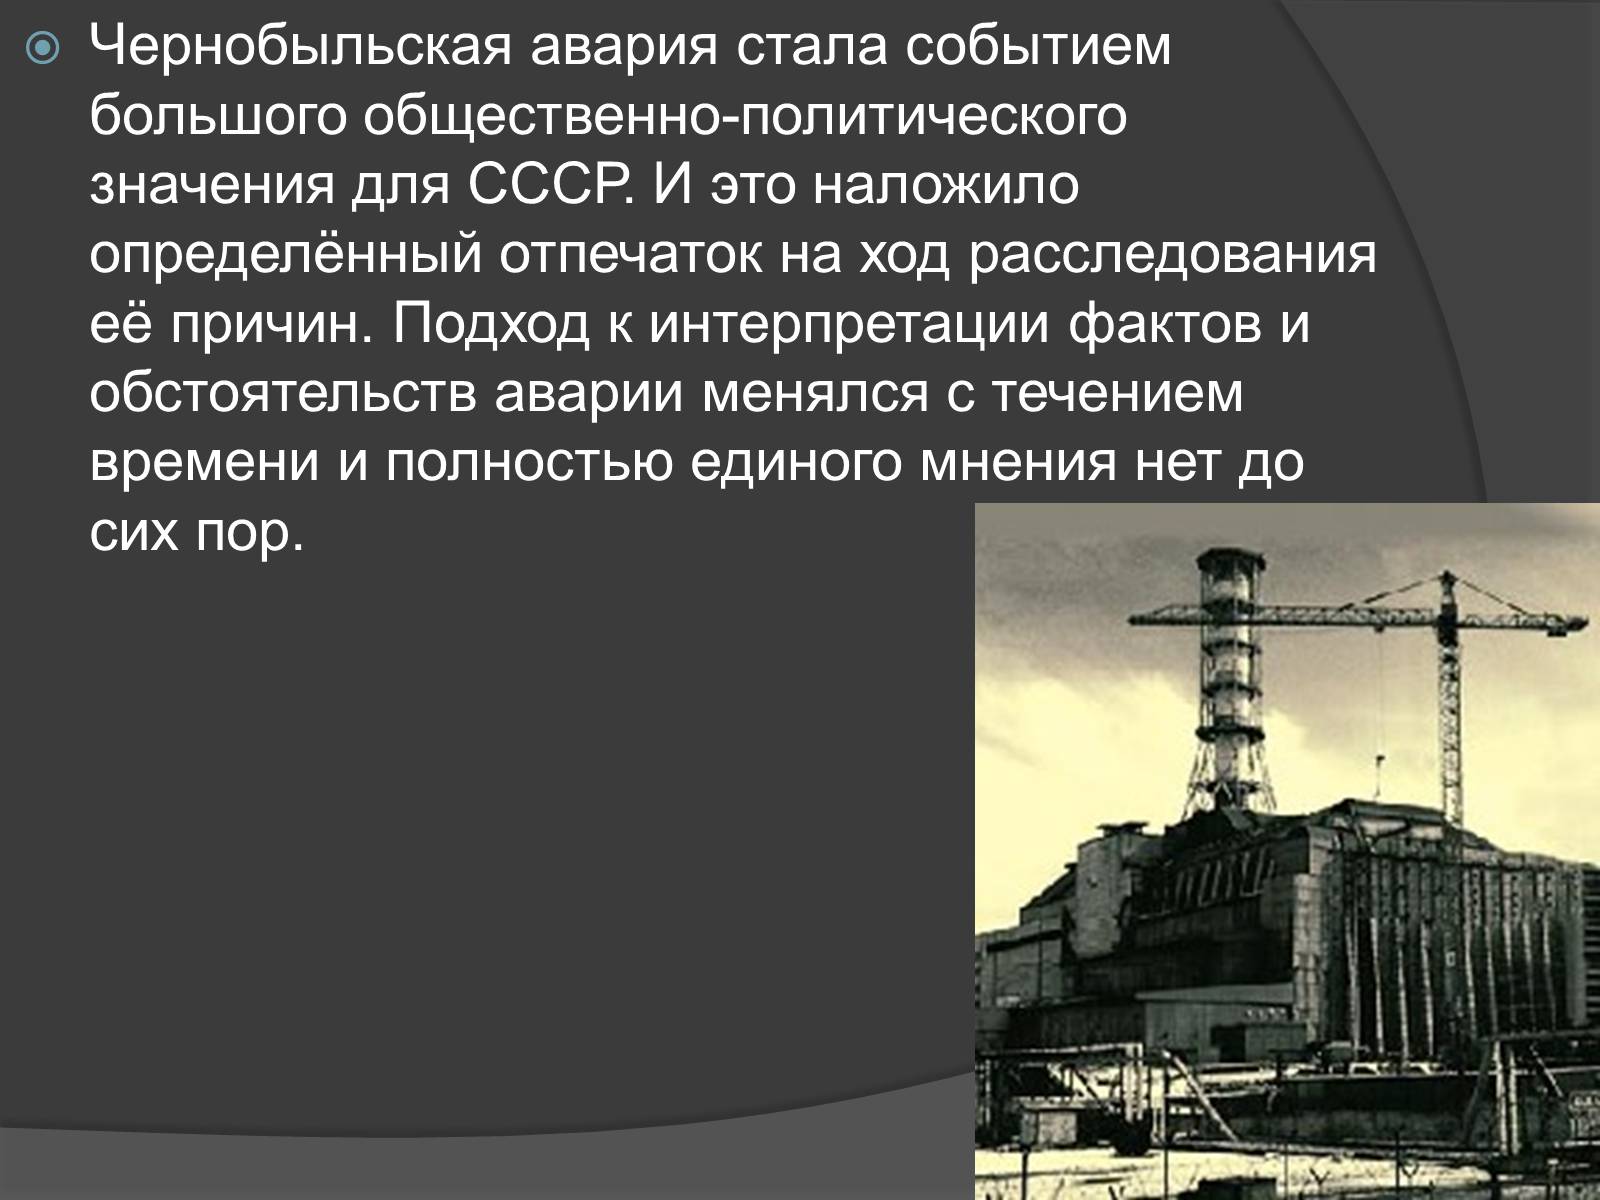 Презентація на тему «Чернобыльская авария» - Слайд #8